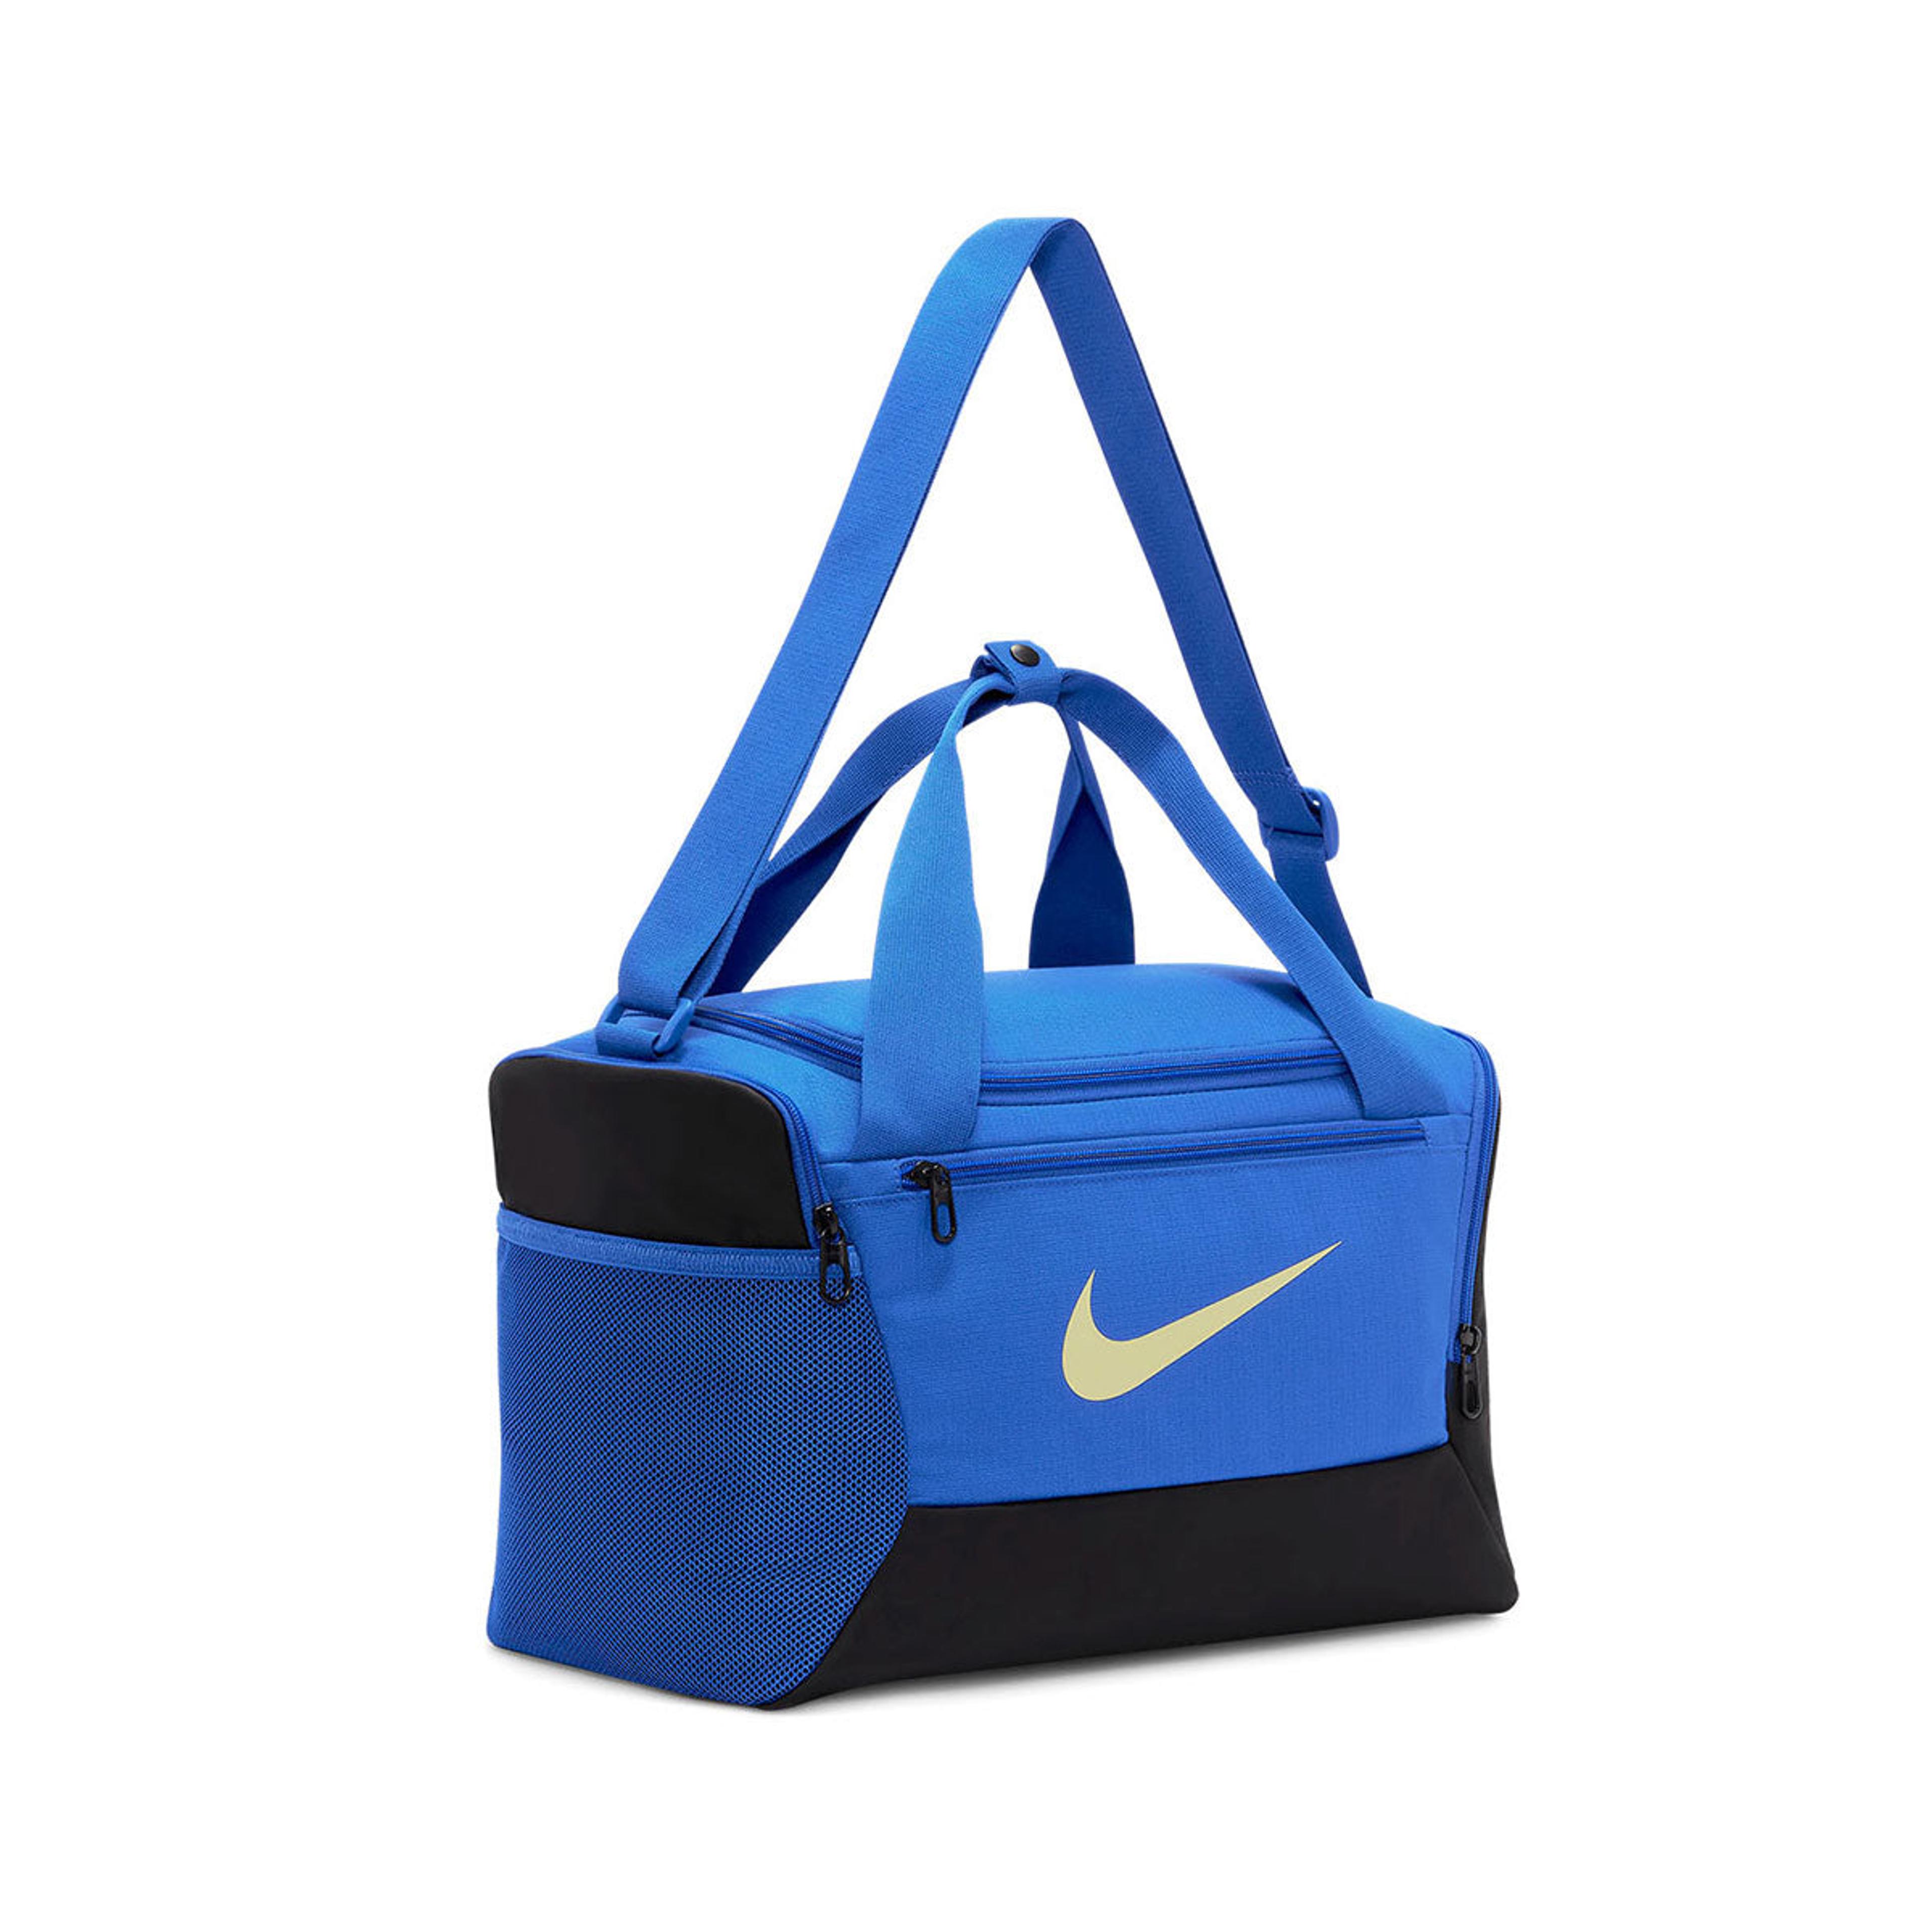 Alternate View 1 of Nike Brasilia 9.5 Training Duffel Bag (Extra-Small, 25L)